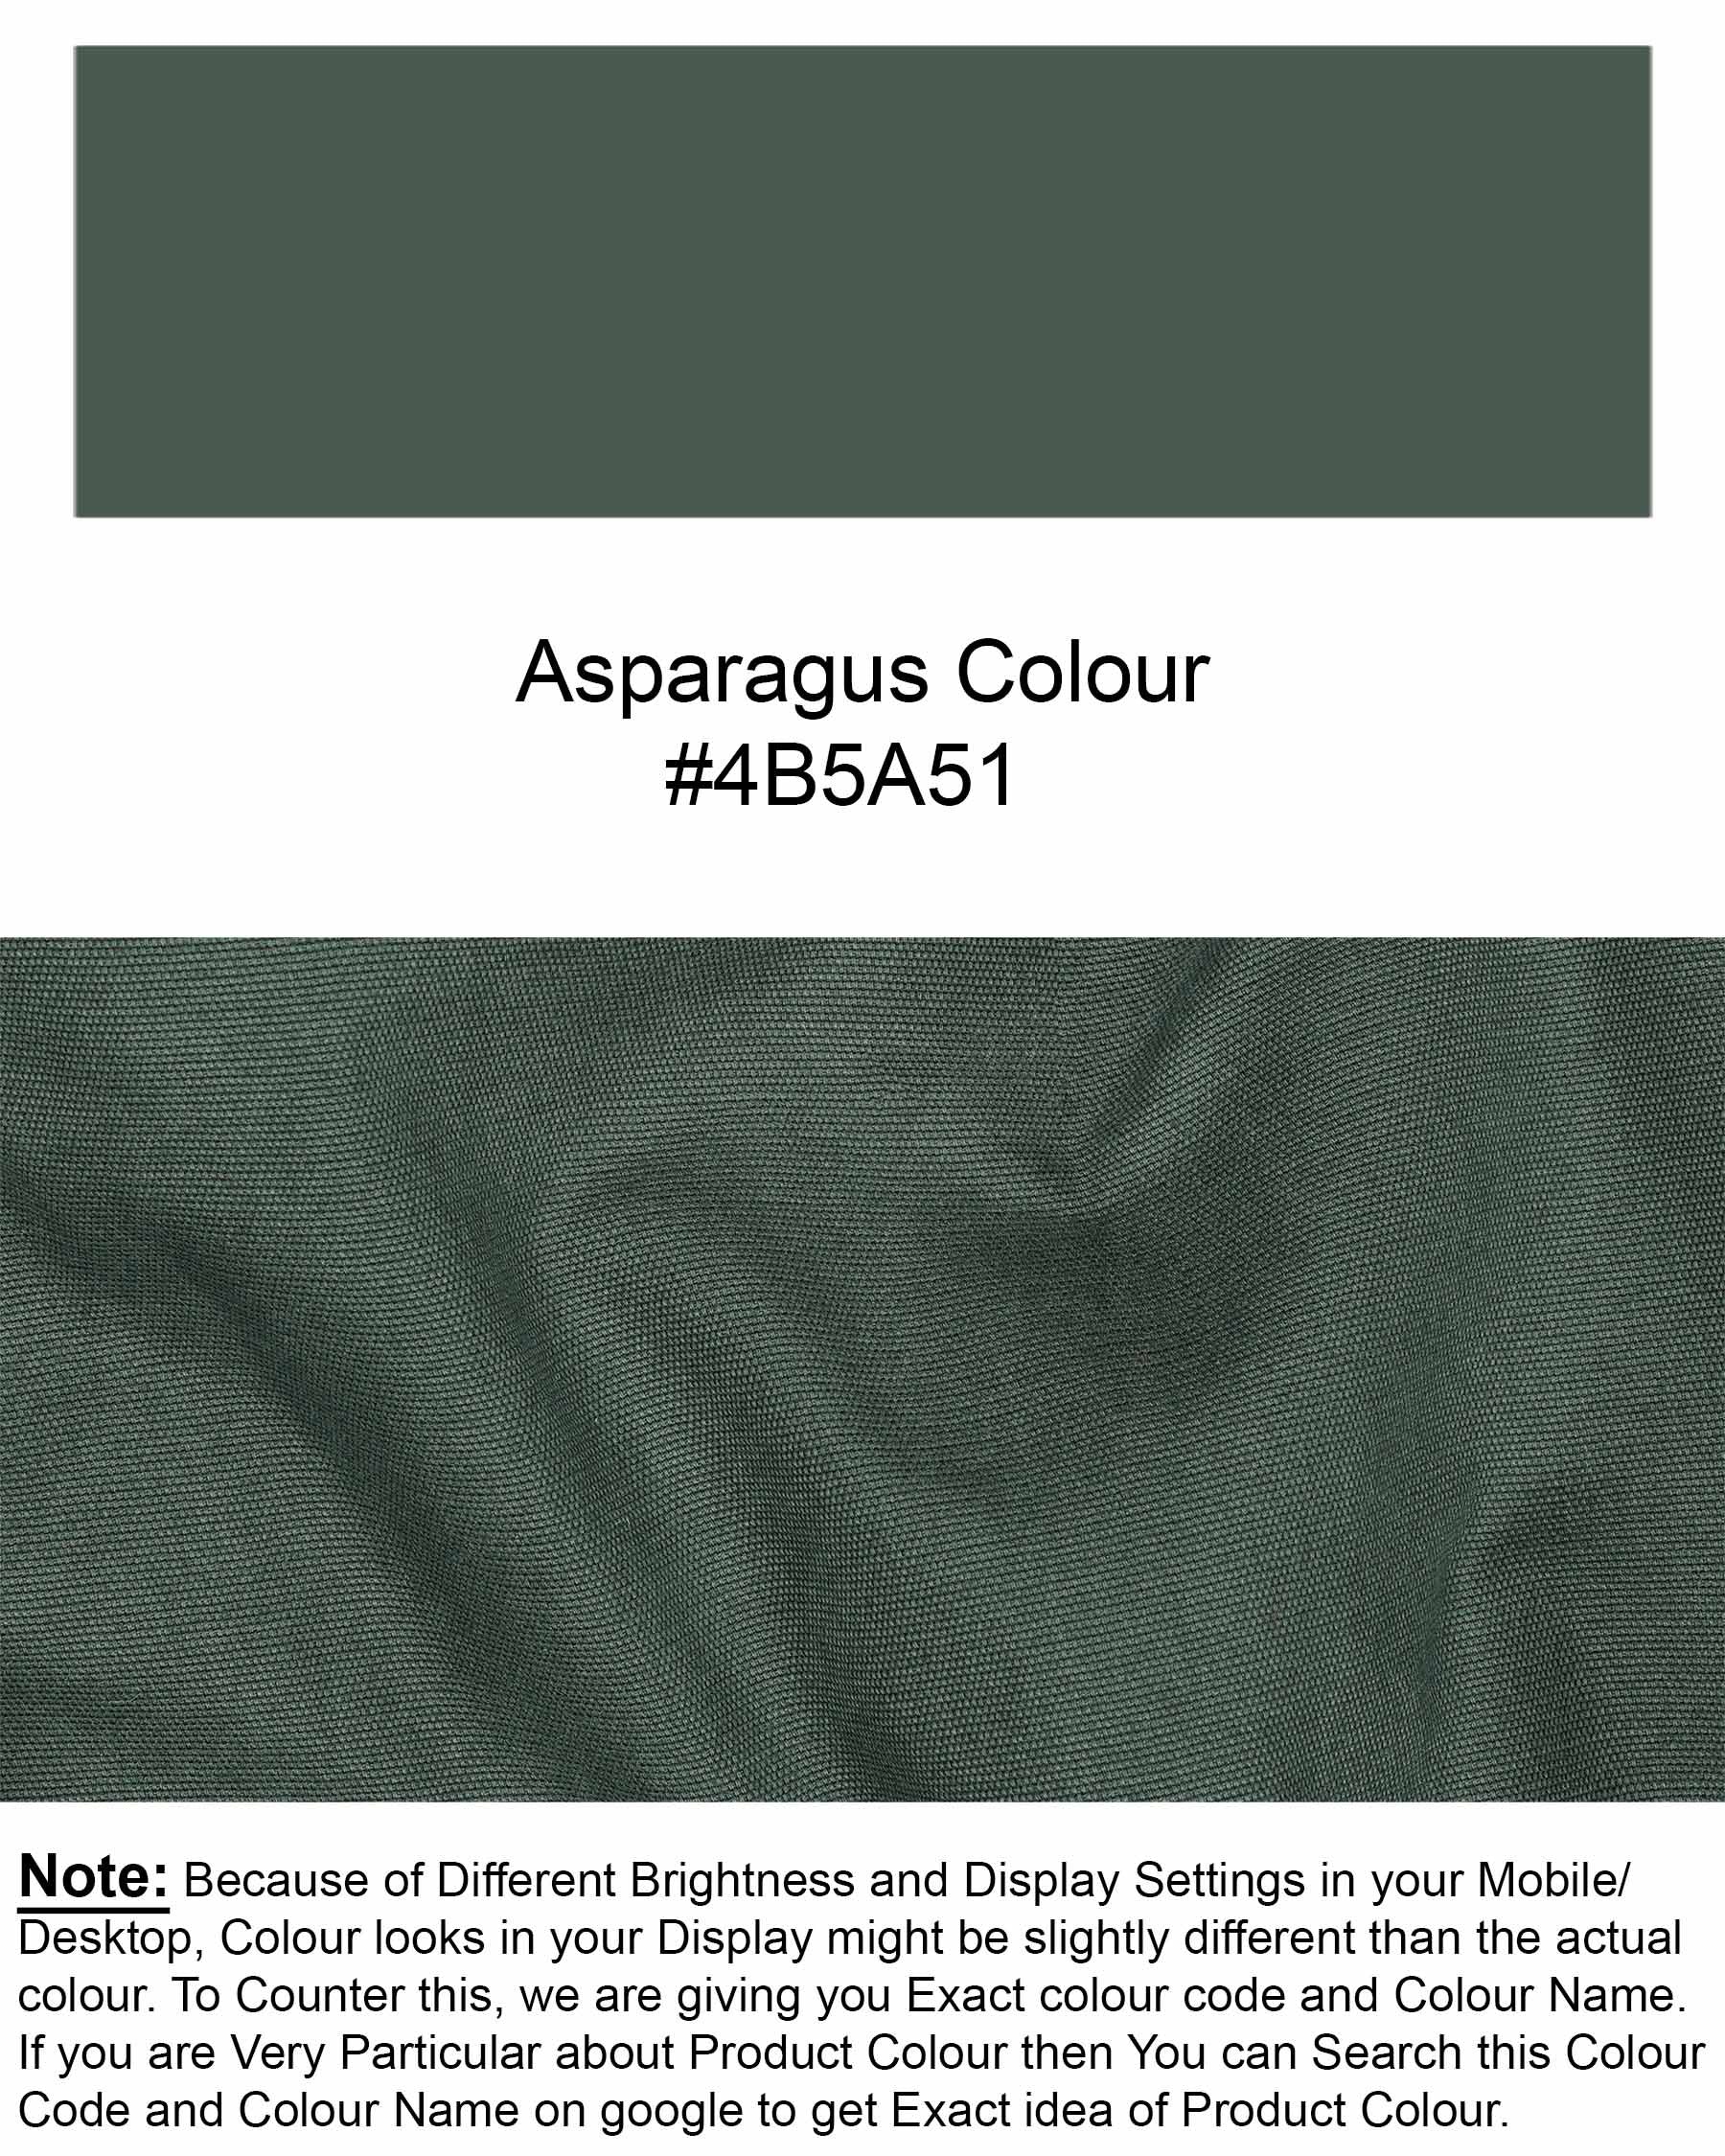 Asparagus Green Cross Placket Premium Cotton Bandhgala Blazer